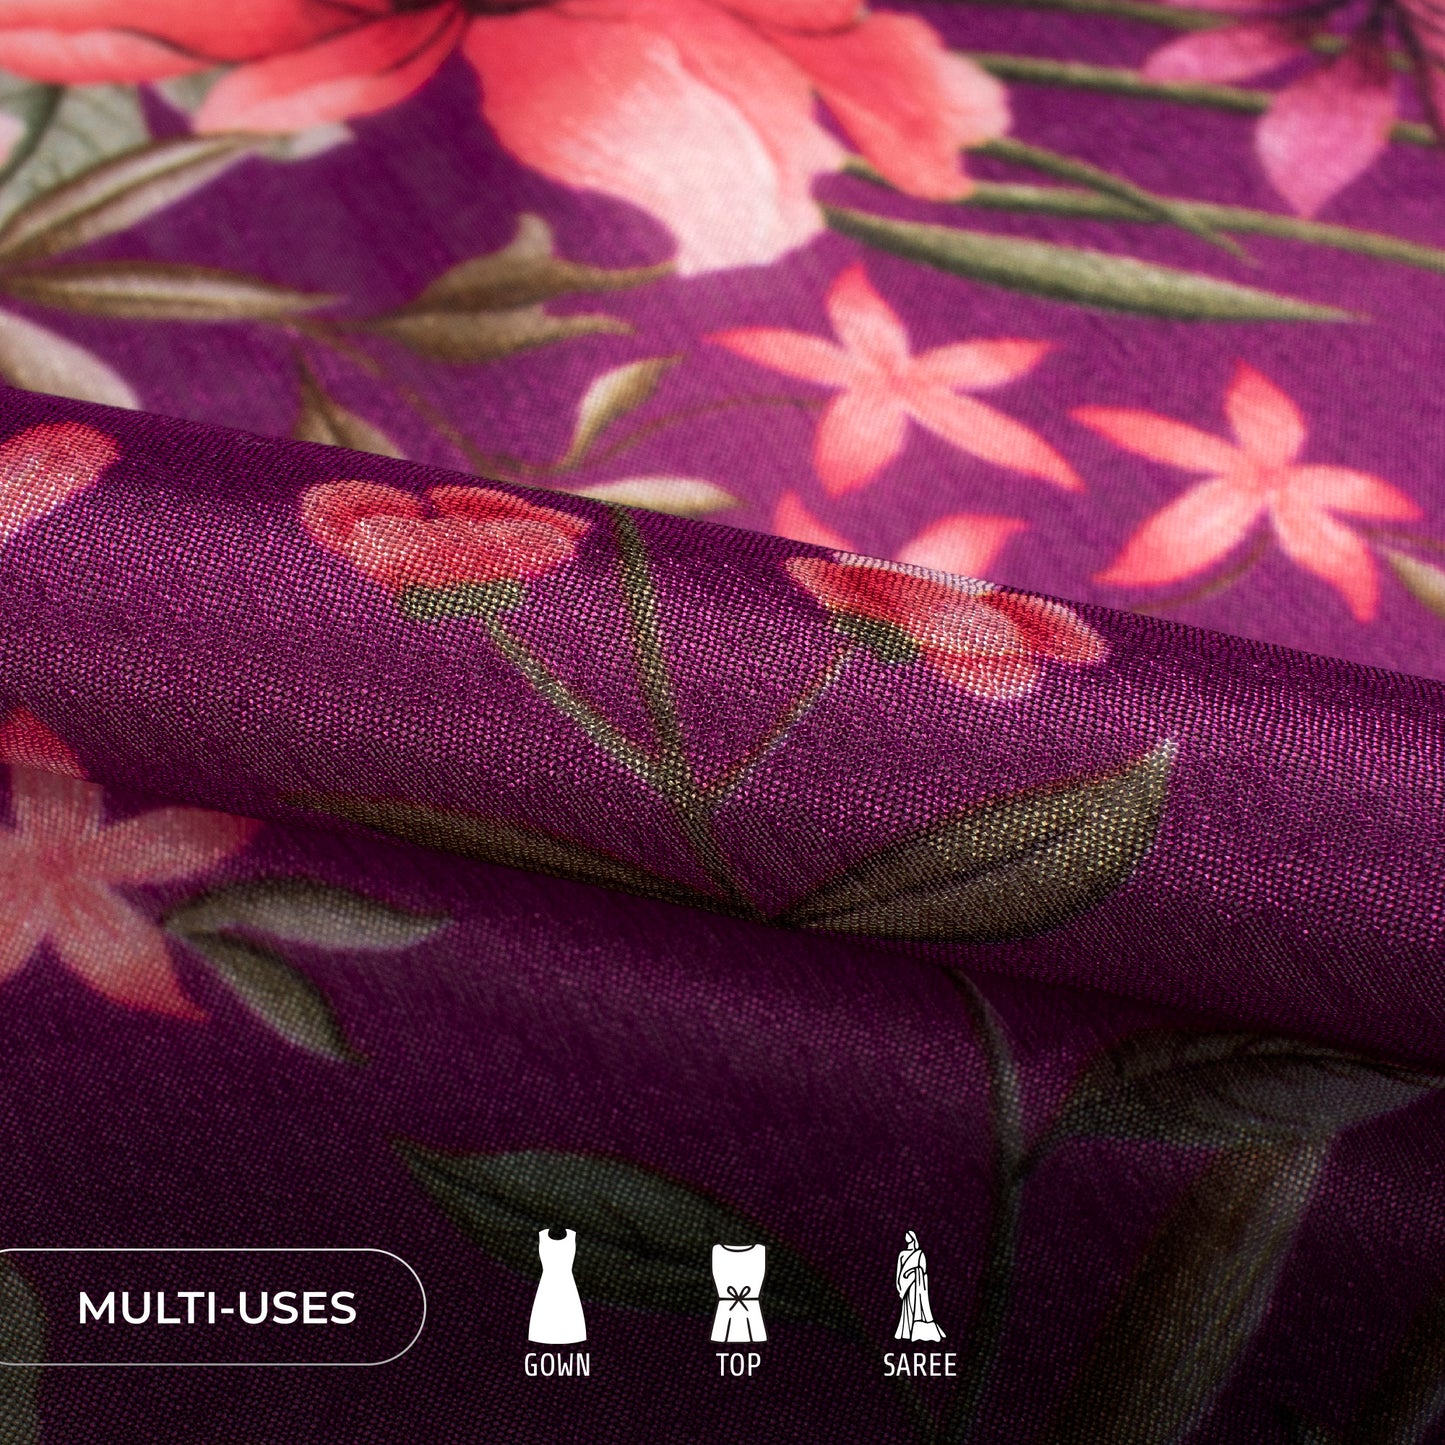 Midnight Purple Floral Digital Print Poly Chinnon Chiffon Fabric